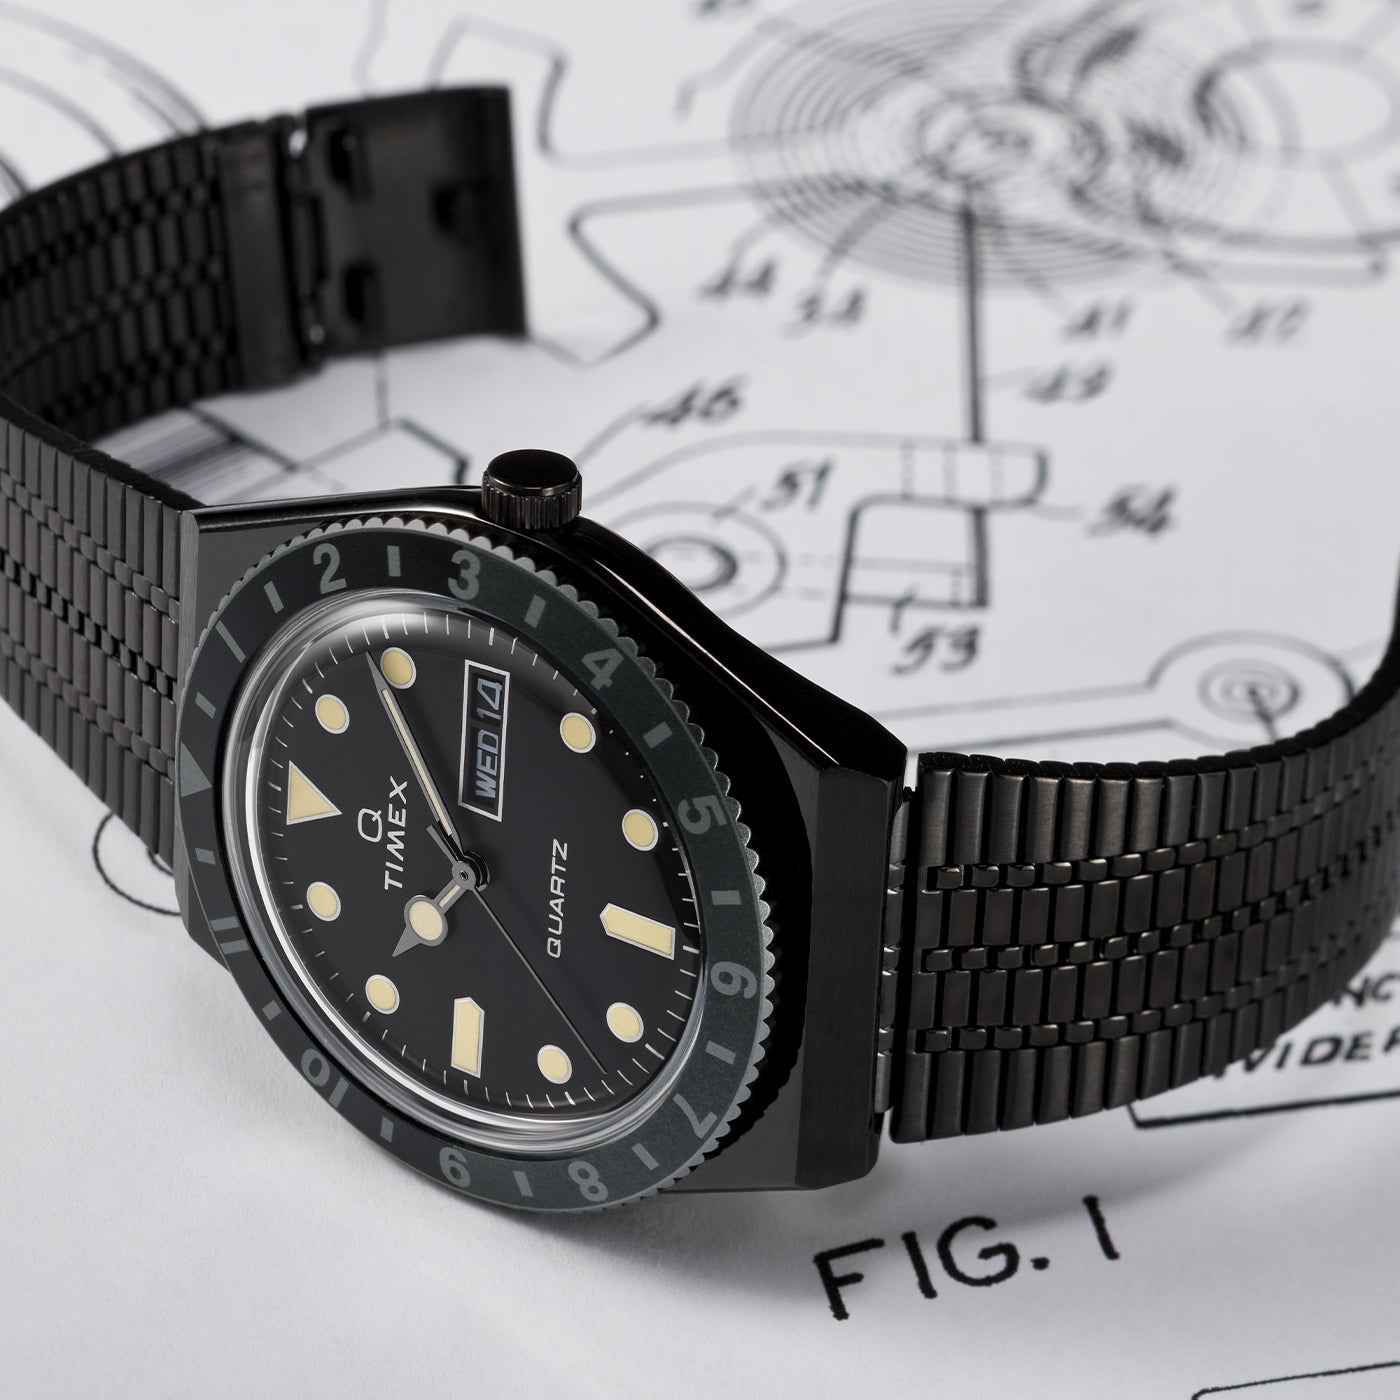 Q Timex Reissue 38mm Stainless Steel Bracelet Watch - TW2T80700 